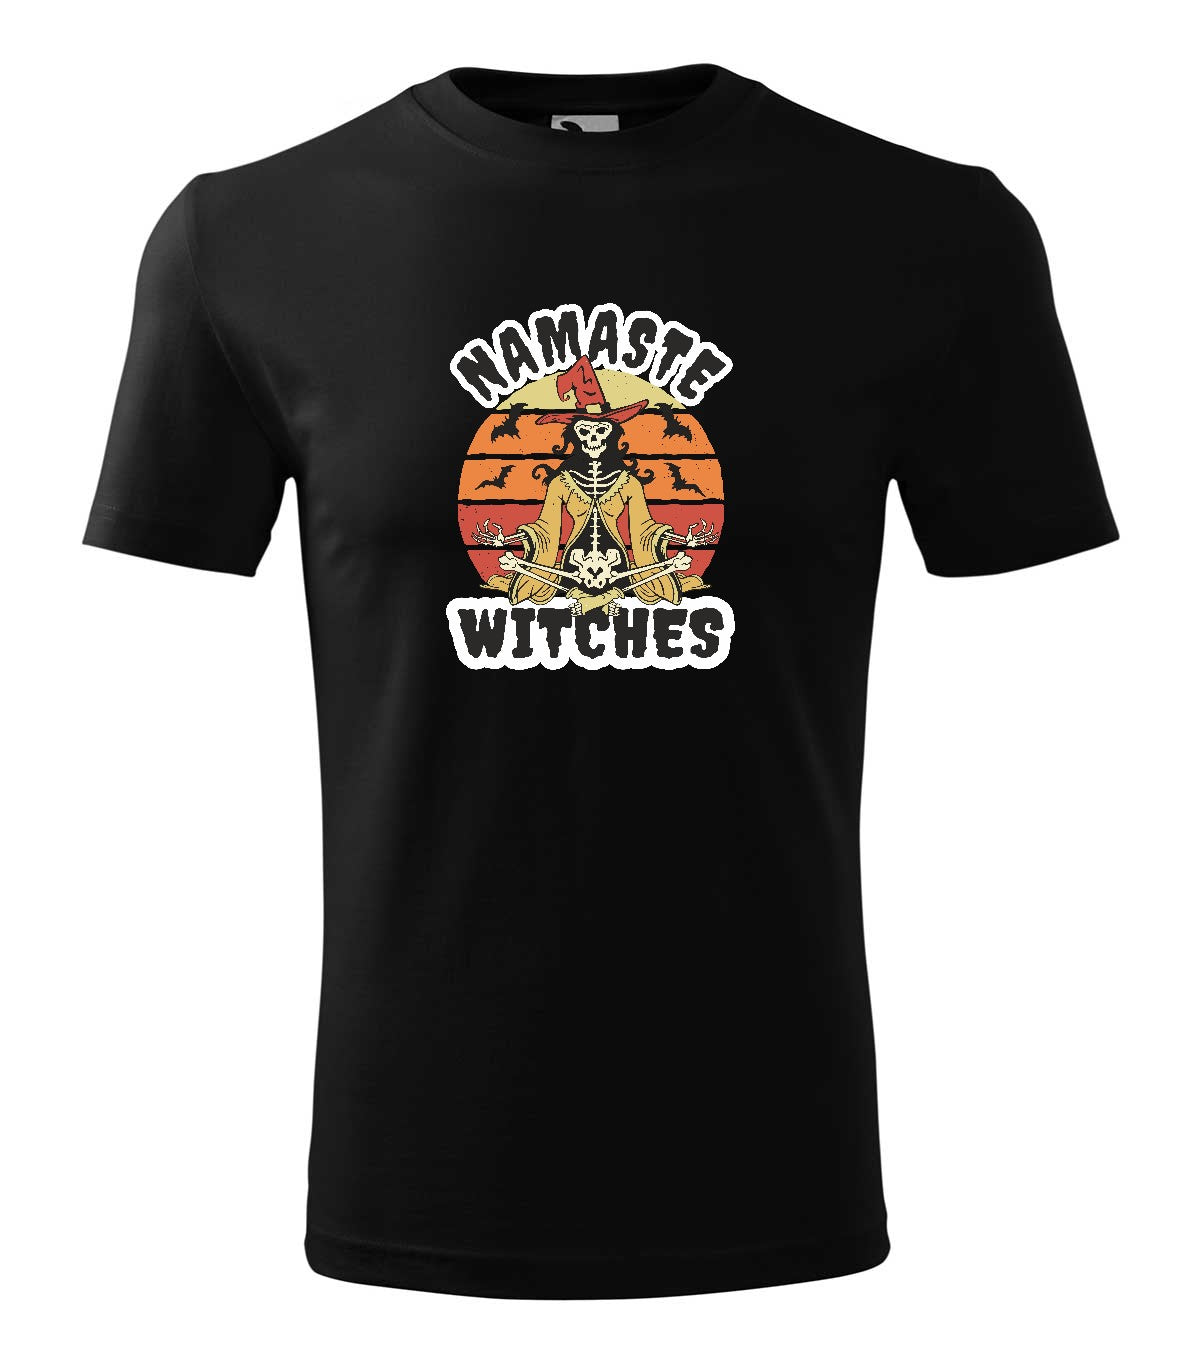 Namaste Witches férfi technikai póló